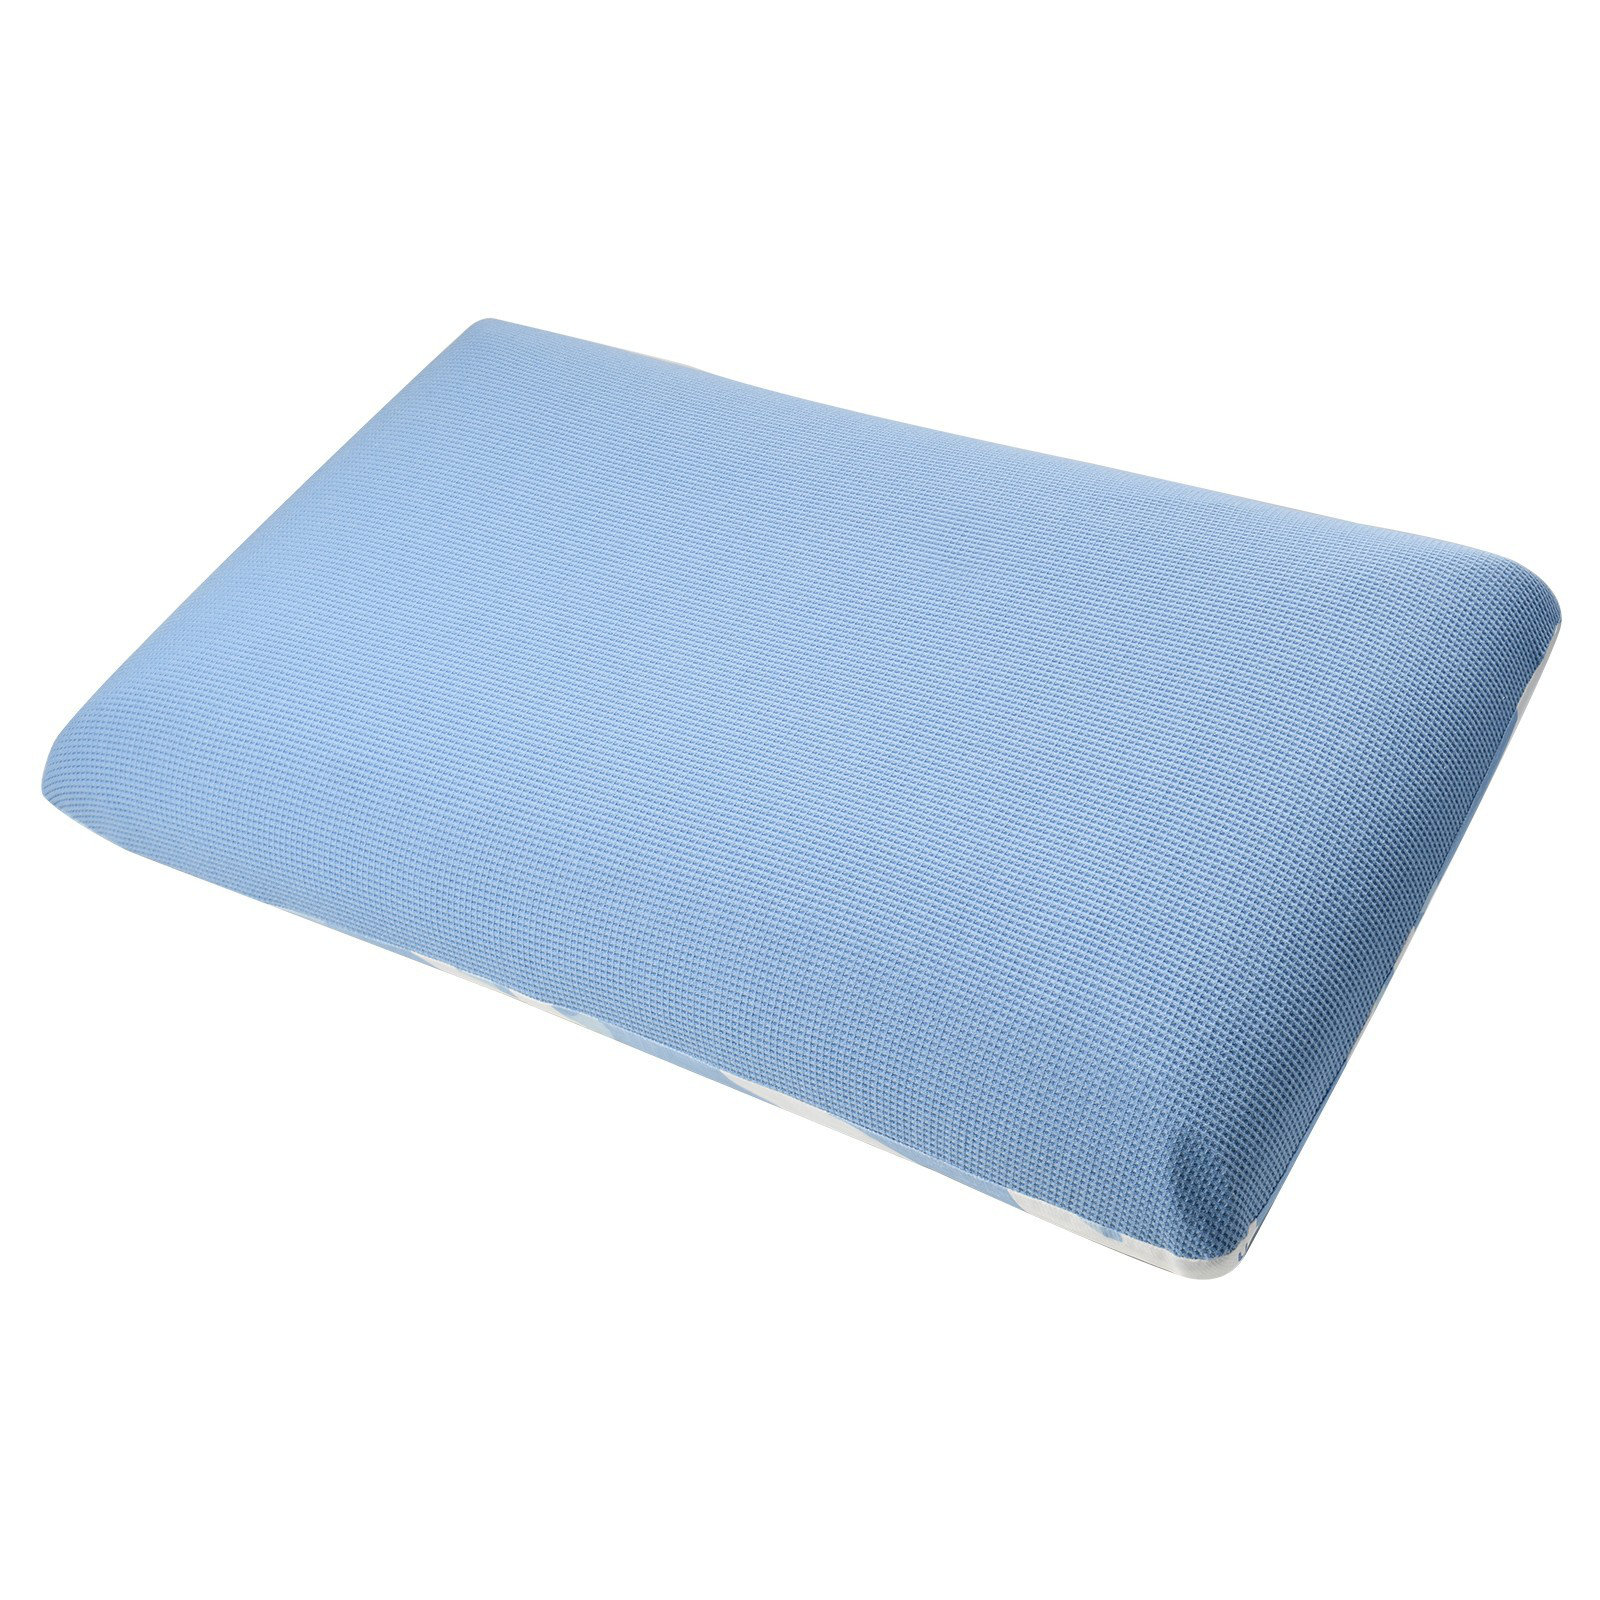 ONDEKT Neck Roll Pillow with Blue Shredded Foam Filling